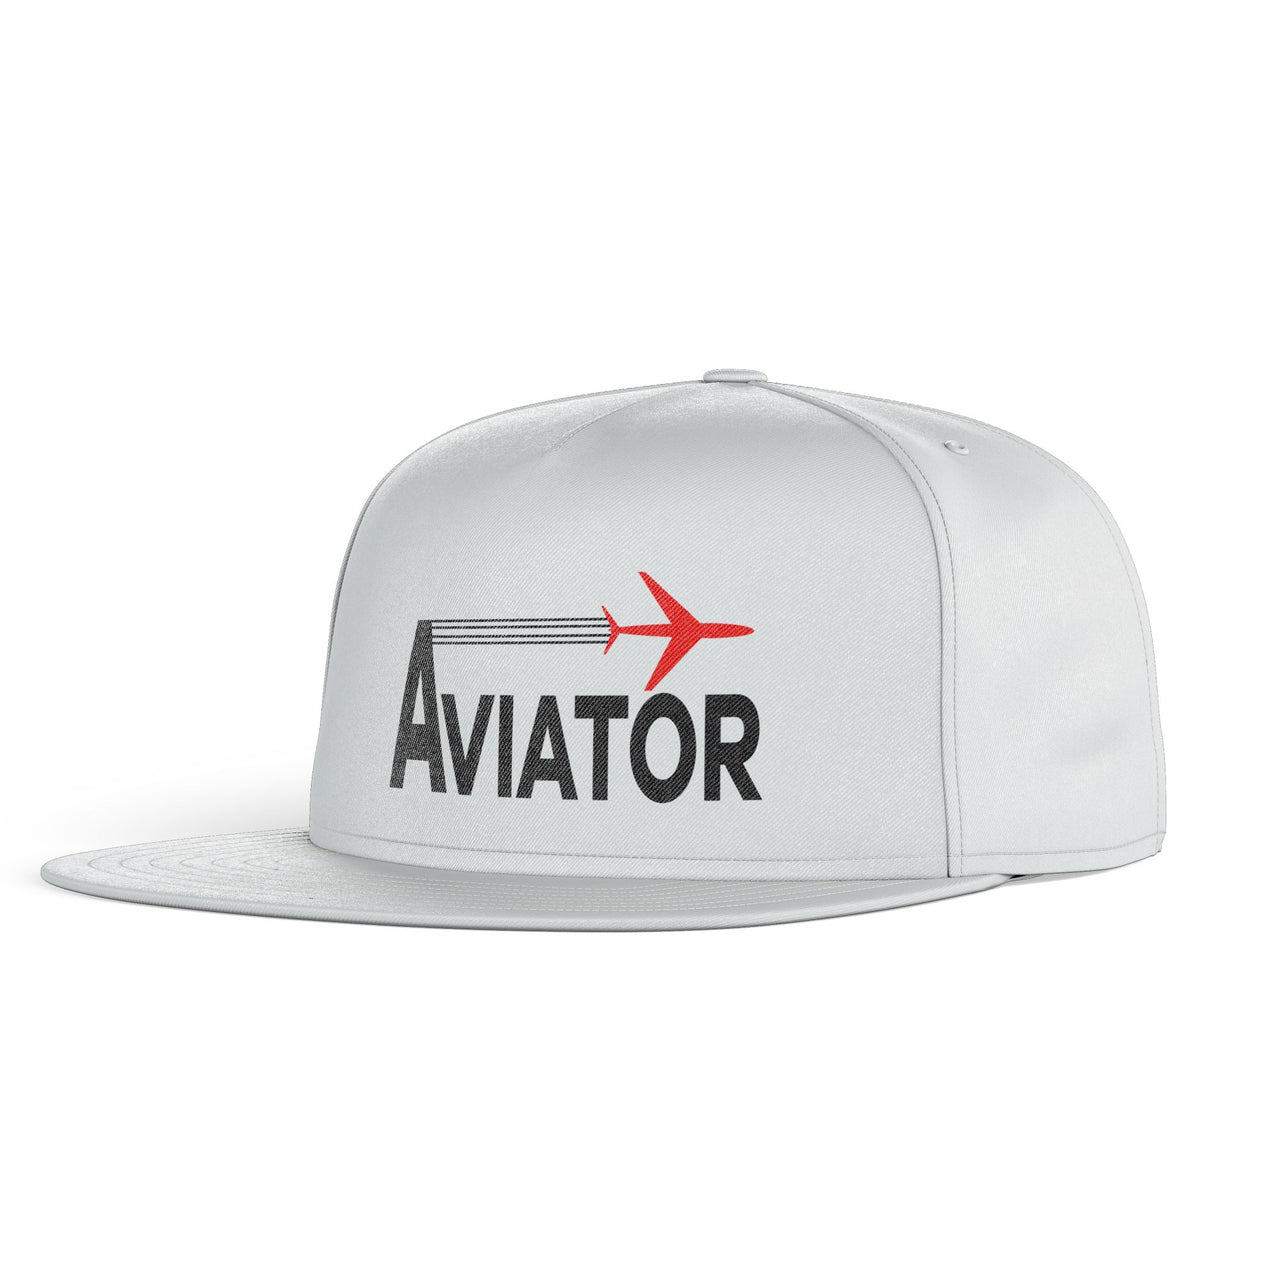 Aviator Designed Snapback Caps & Hats